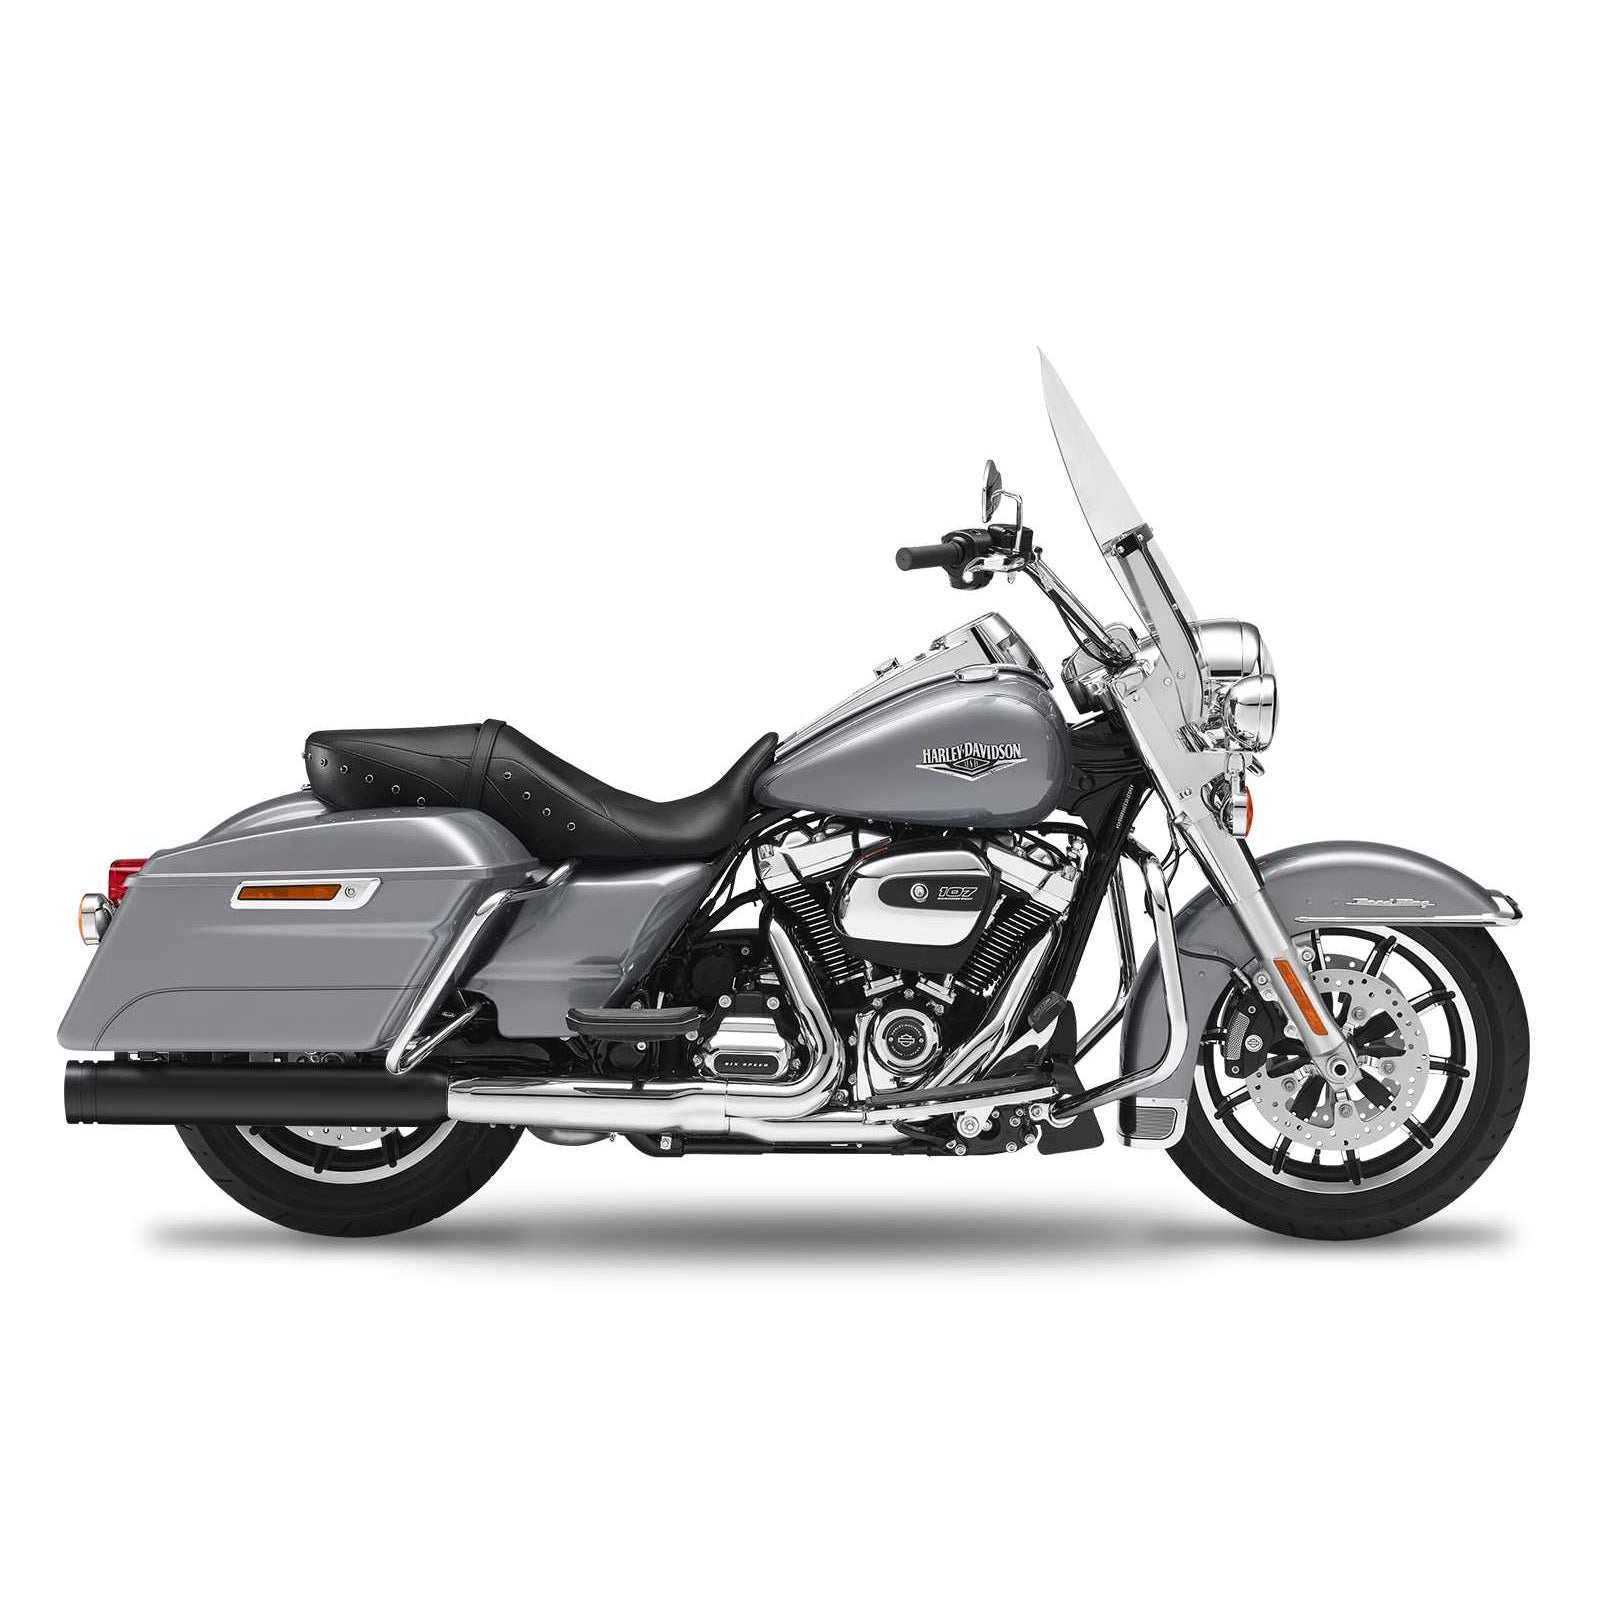 Кesstech 2017 Harley-Davidson Street Glide Special Slipons adjustable